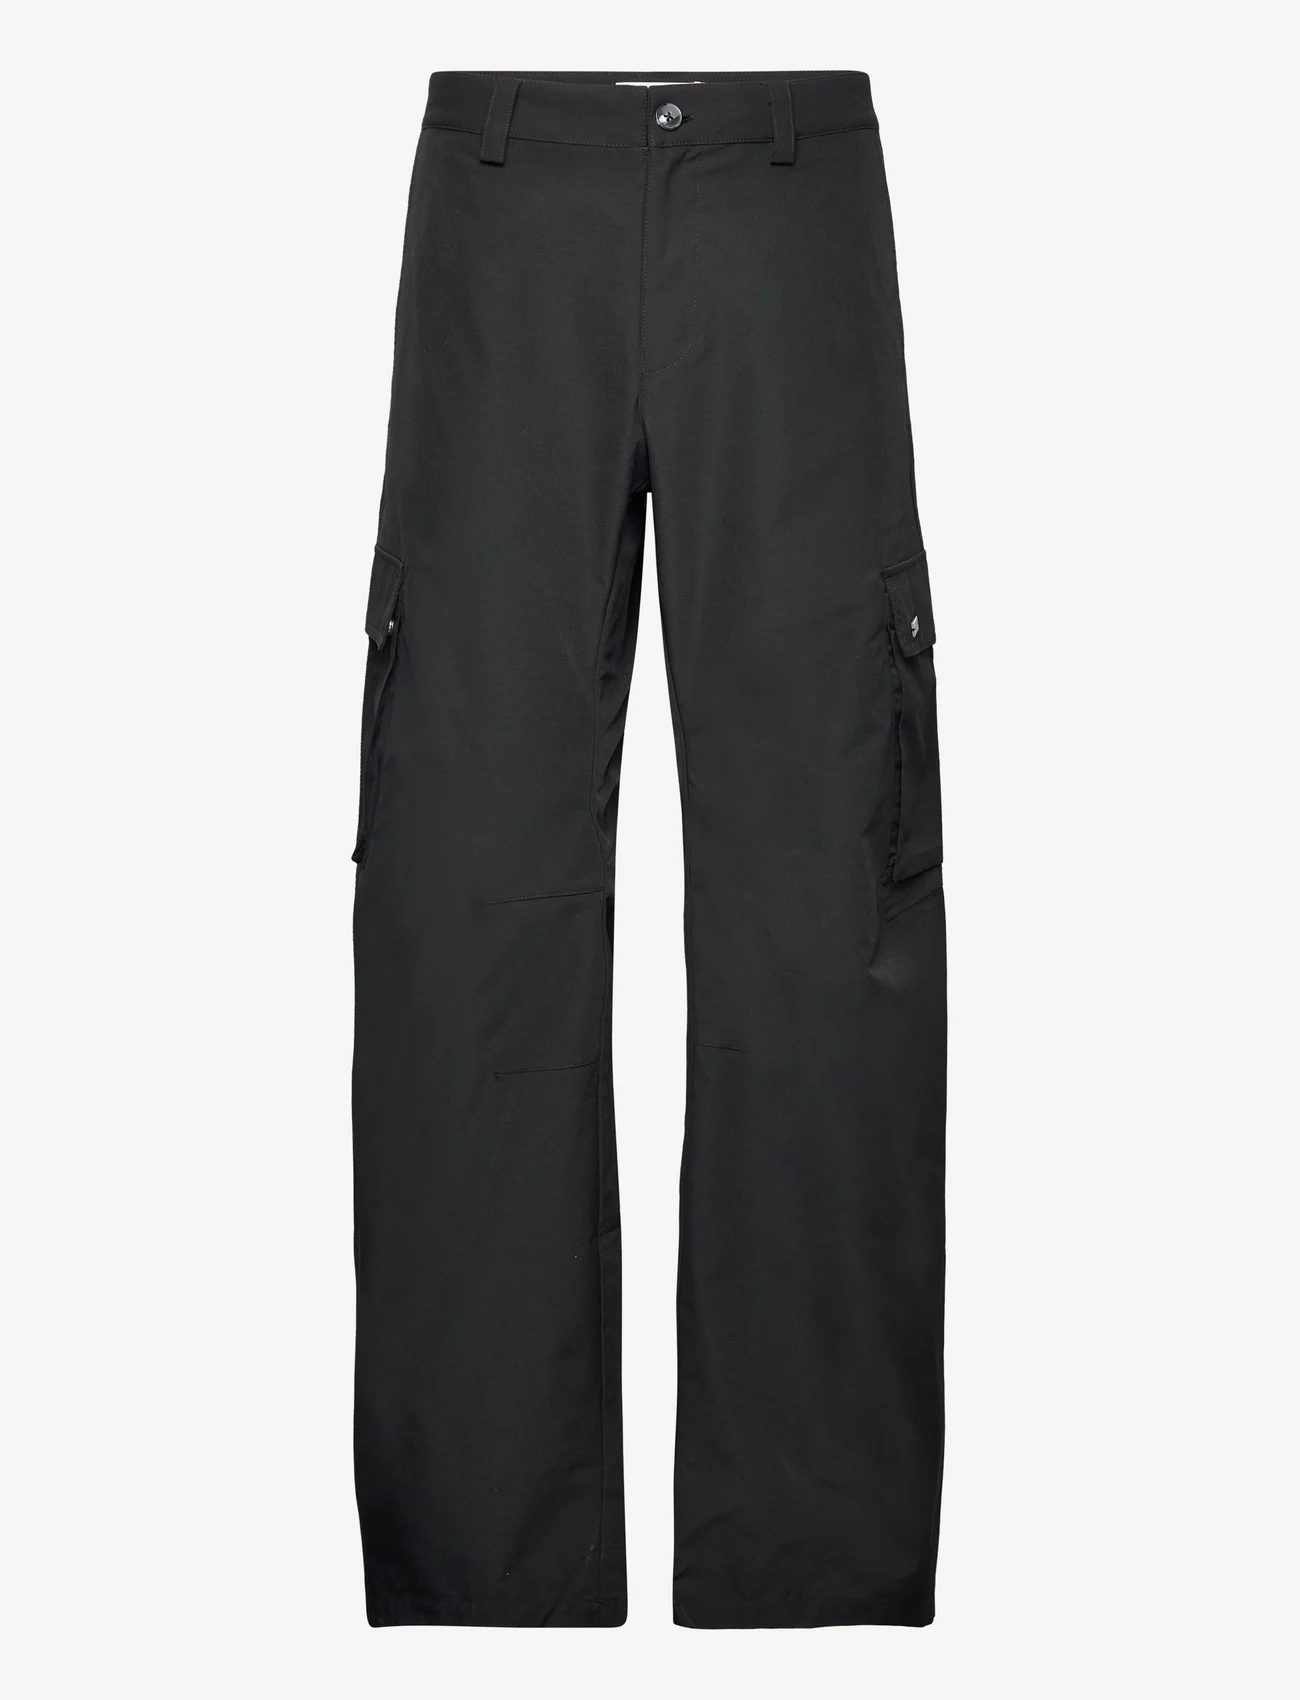 HAN Kjøbenhavn - Ripstop Cargo Trousers - cargo stila bikses - black - 0